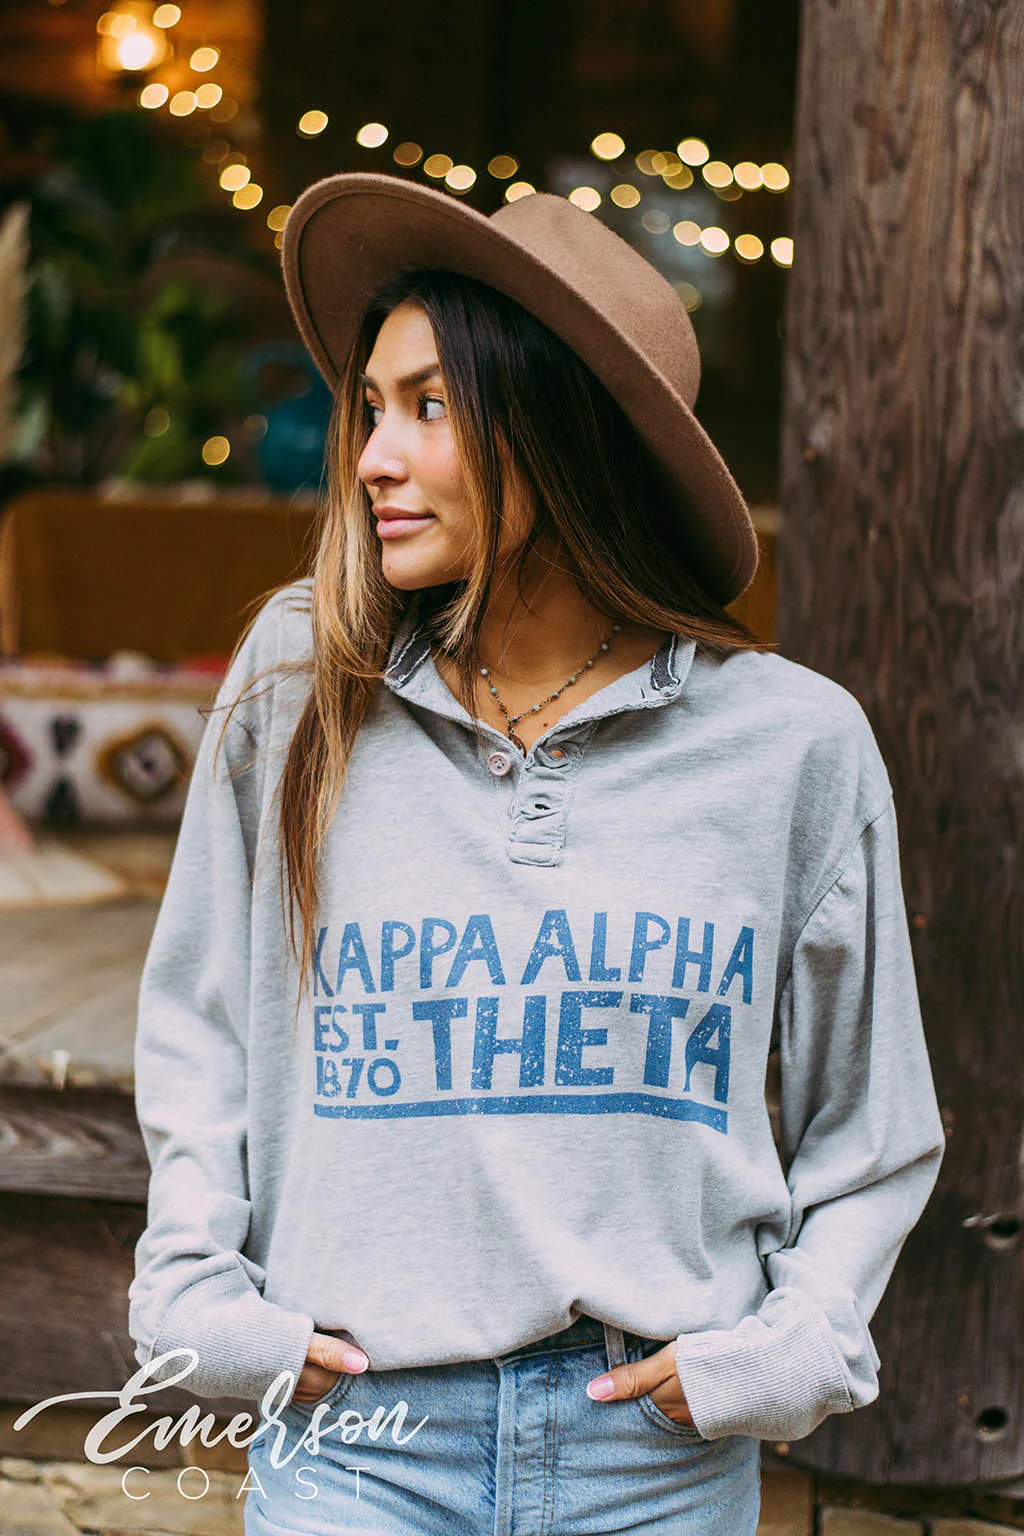 Kappa Alpha Theta Custom Sorority T-shirt Designs - Kappa Alpha